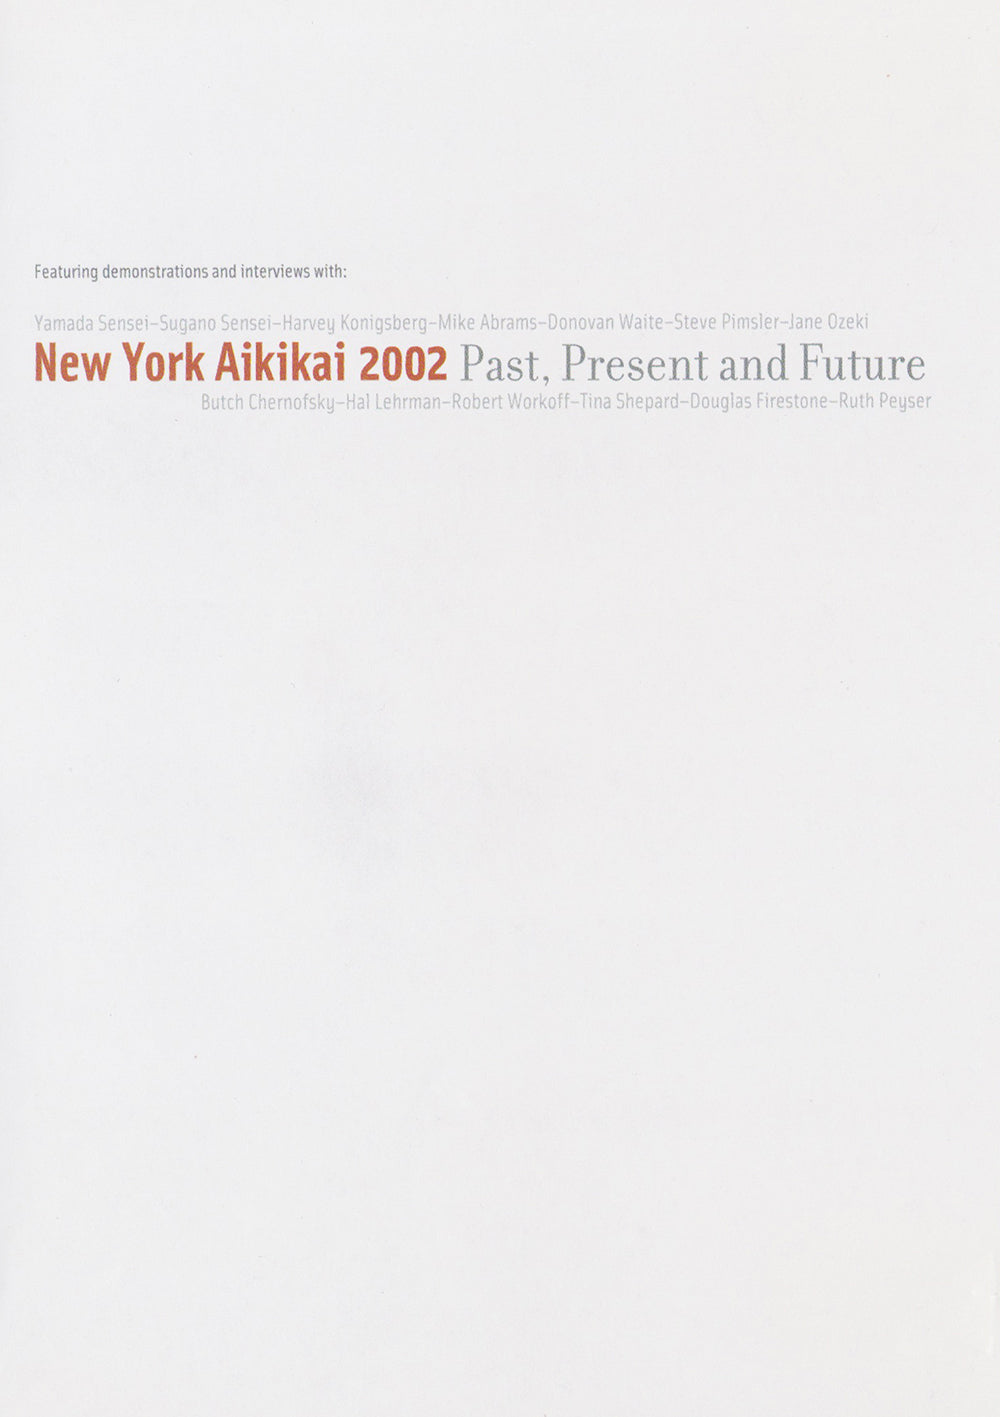 New York Aikikai: Past, Present, & Future DVD - Budovideos Inc